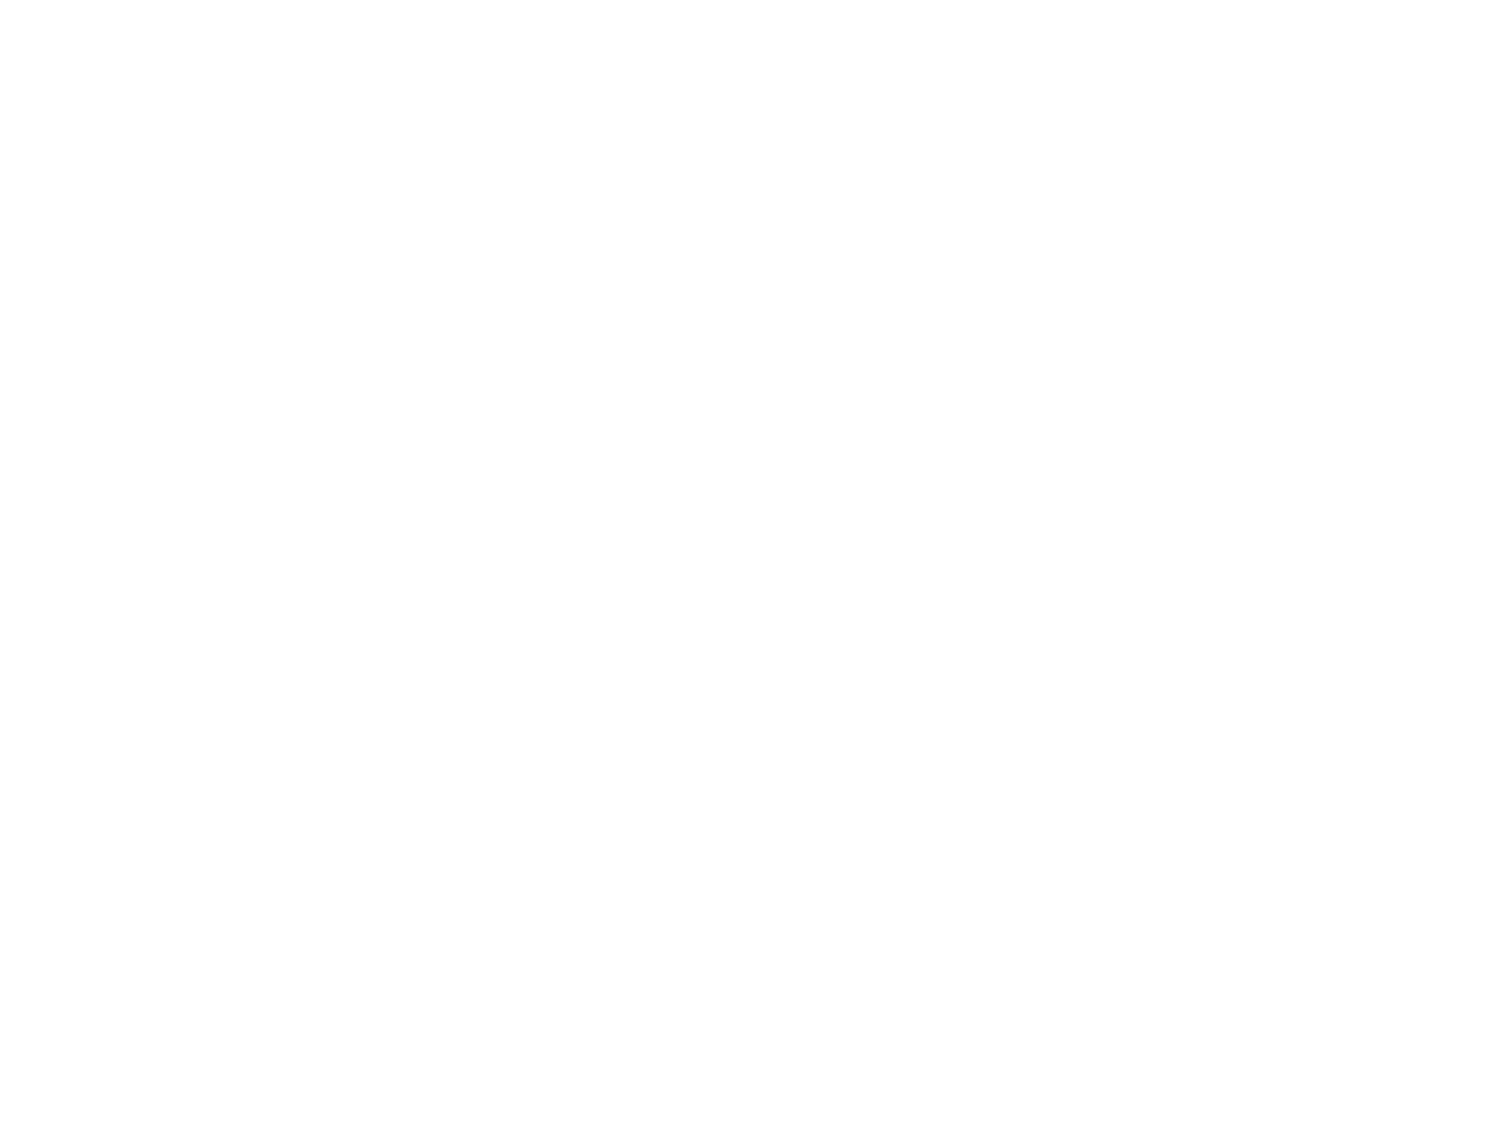 The Whiskey Jar